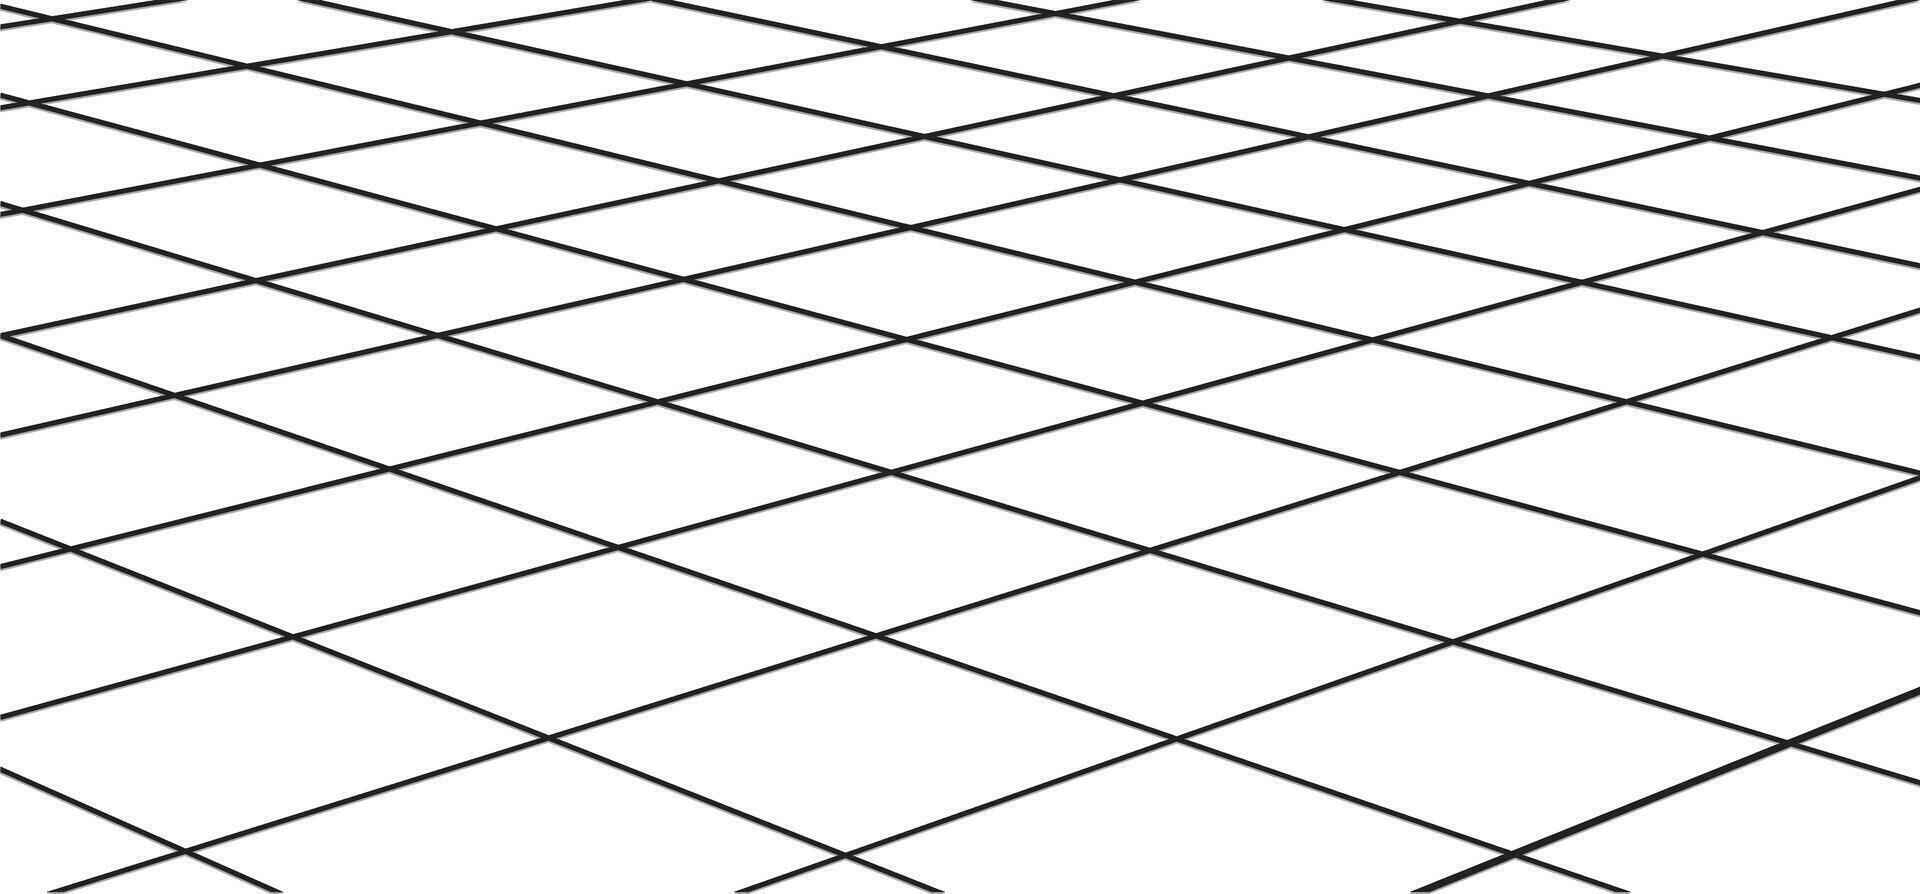 black and white tiled floor background. Vector minimalist illustration